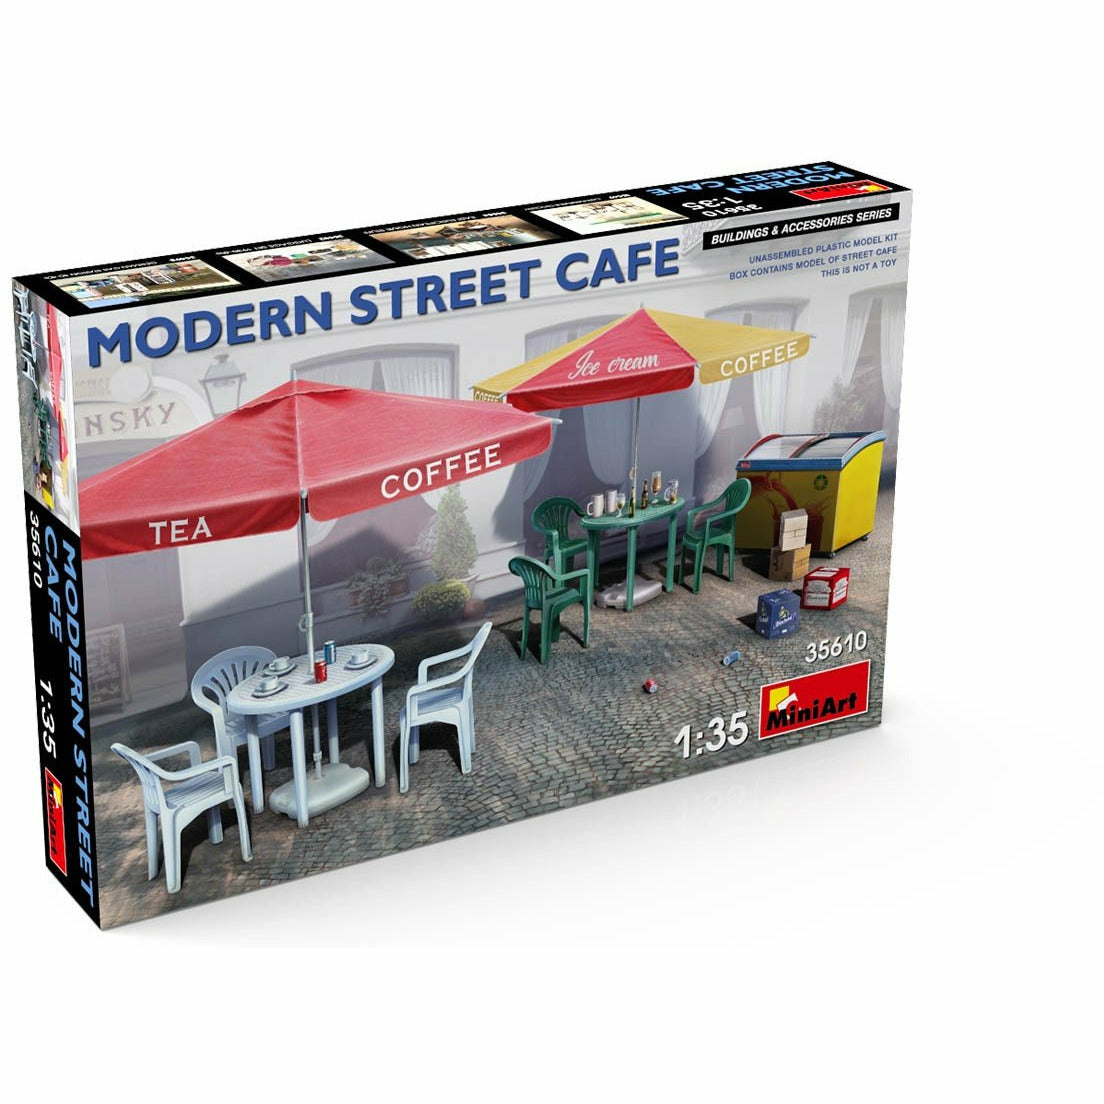 Modern Street Cafe #35610 1/35 Scenery Kit by MiniArt